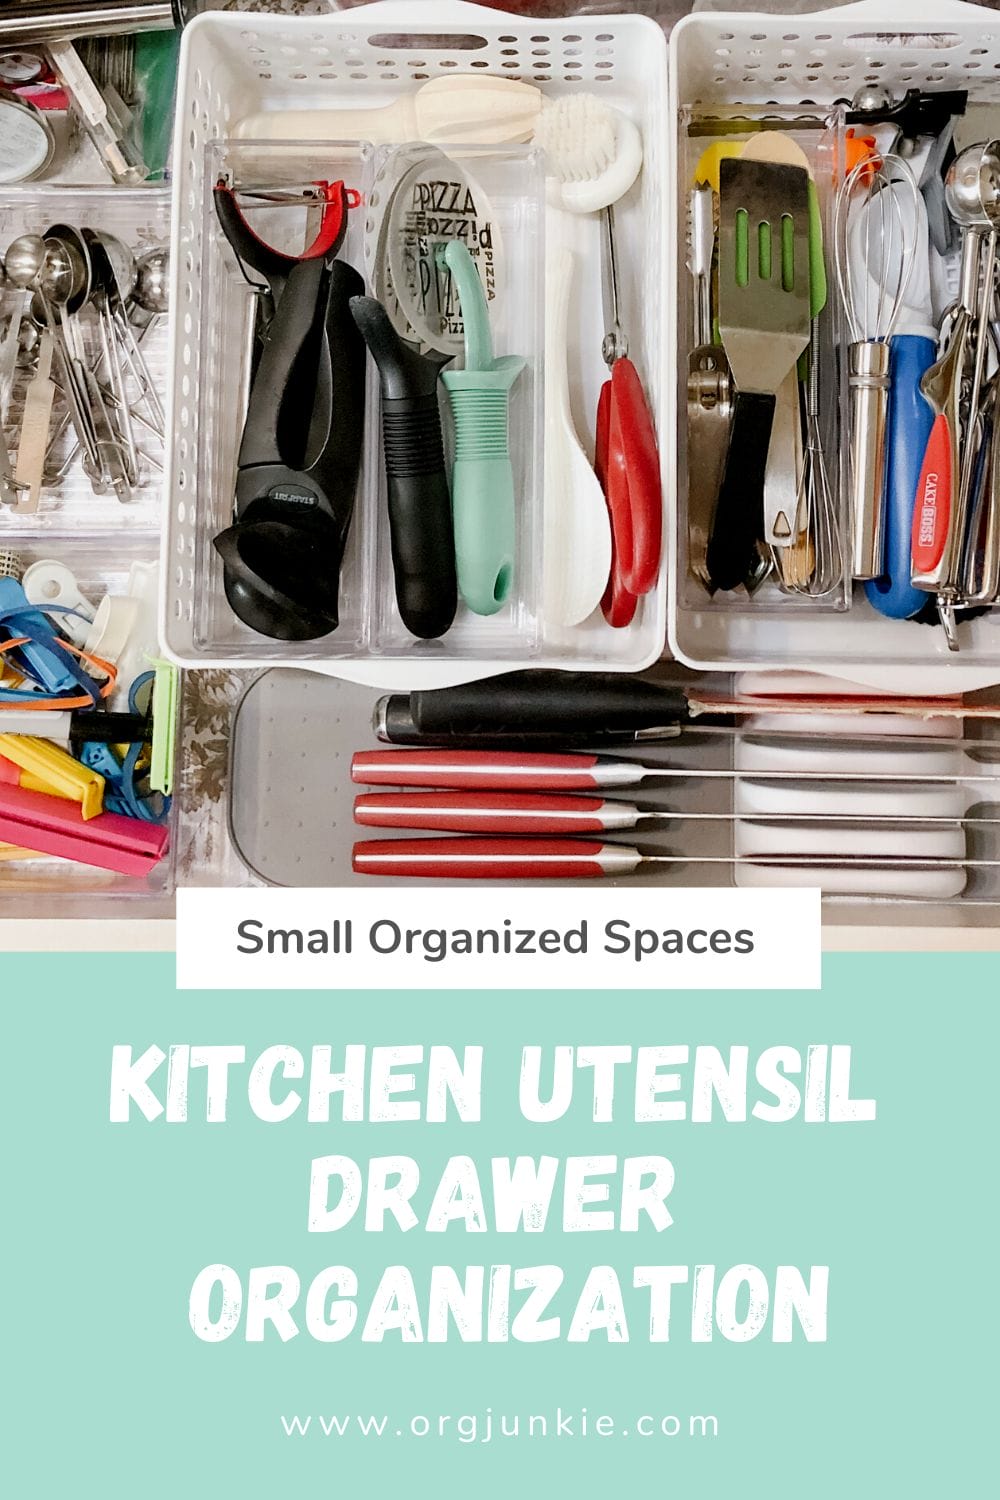 Small Organized Spaces: Kitchen Utensil Drawer Organization at I'm an Organizing Junkie blog